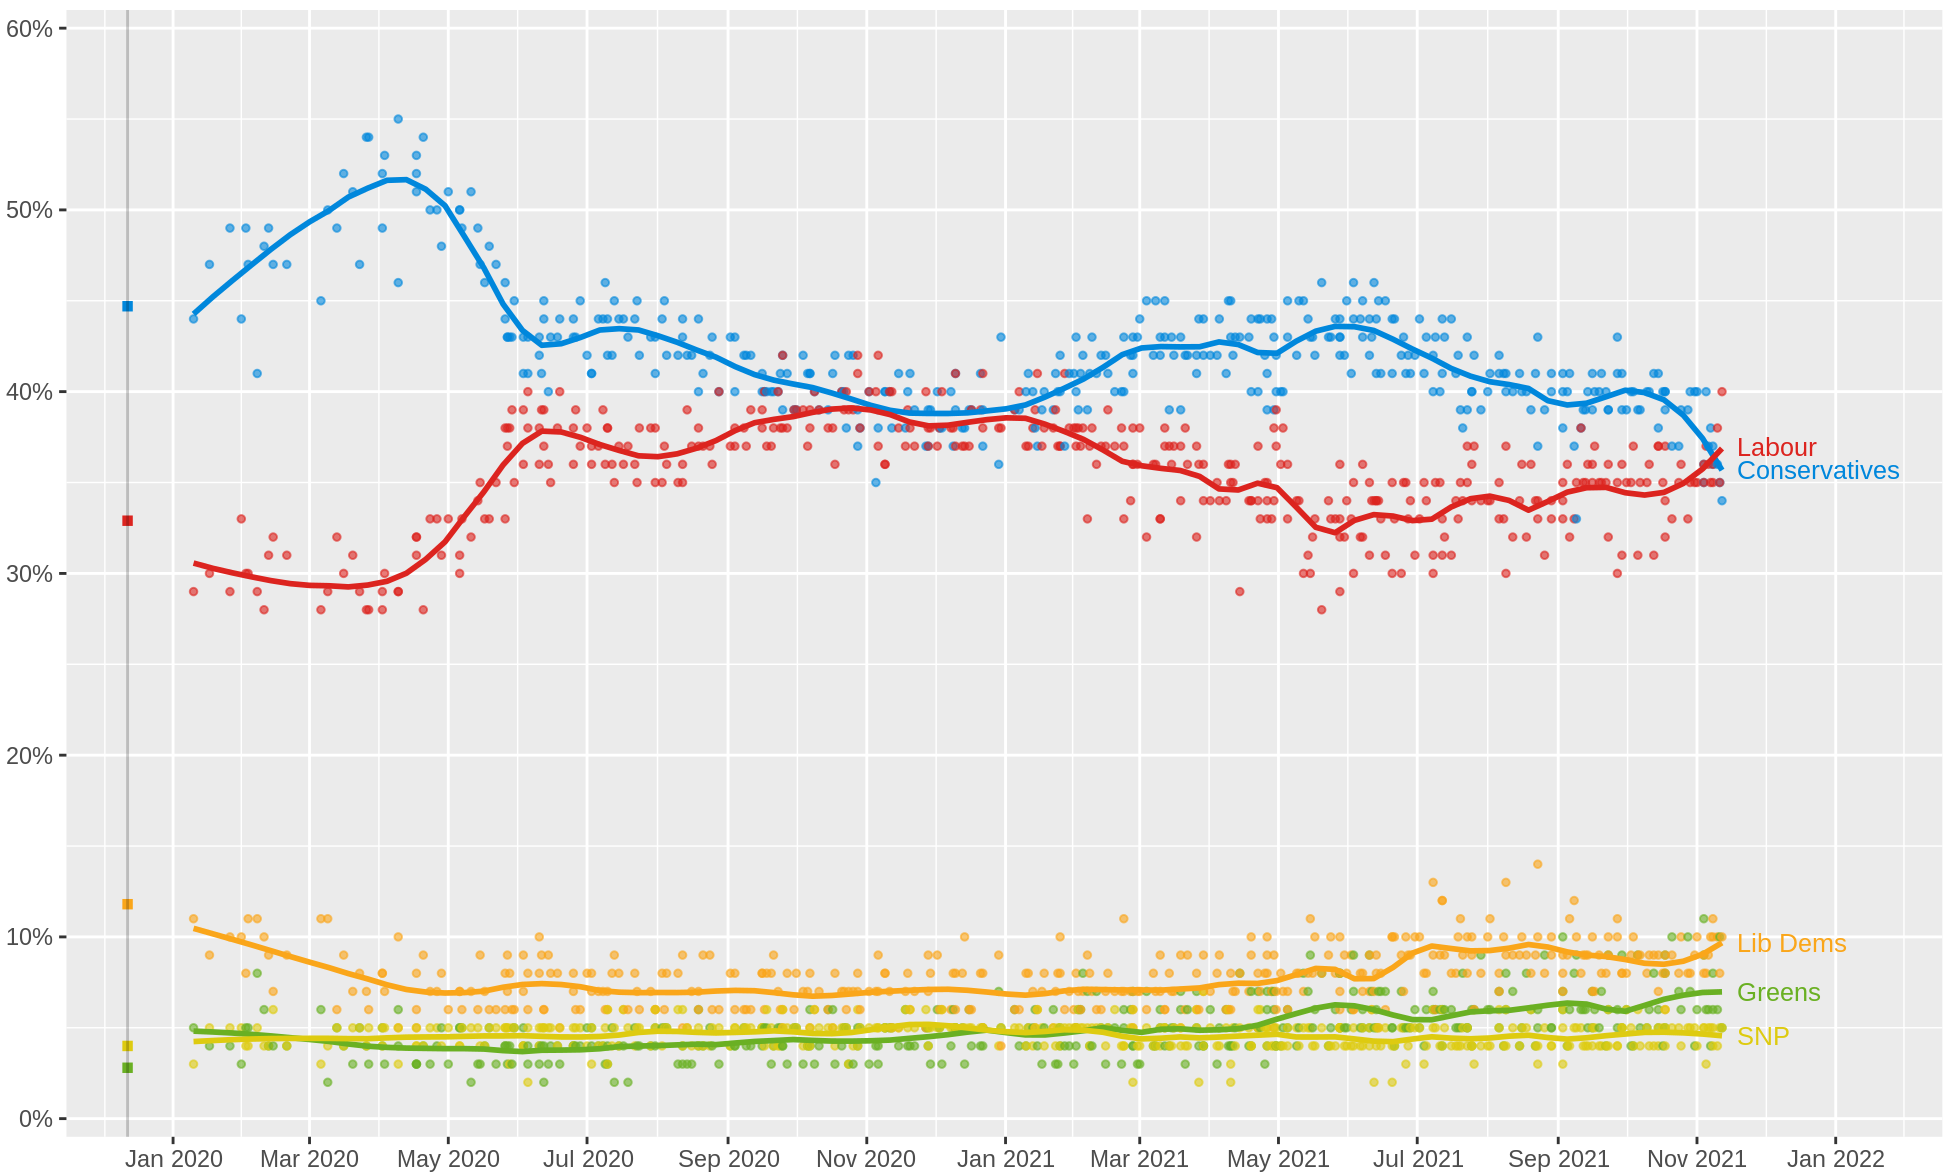 UK political polling graph Wikipedia November 2021 - enlarge